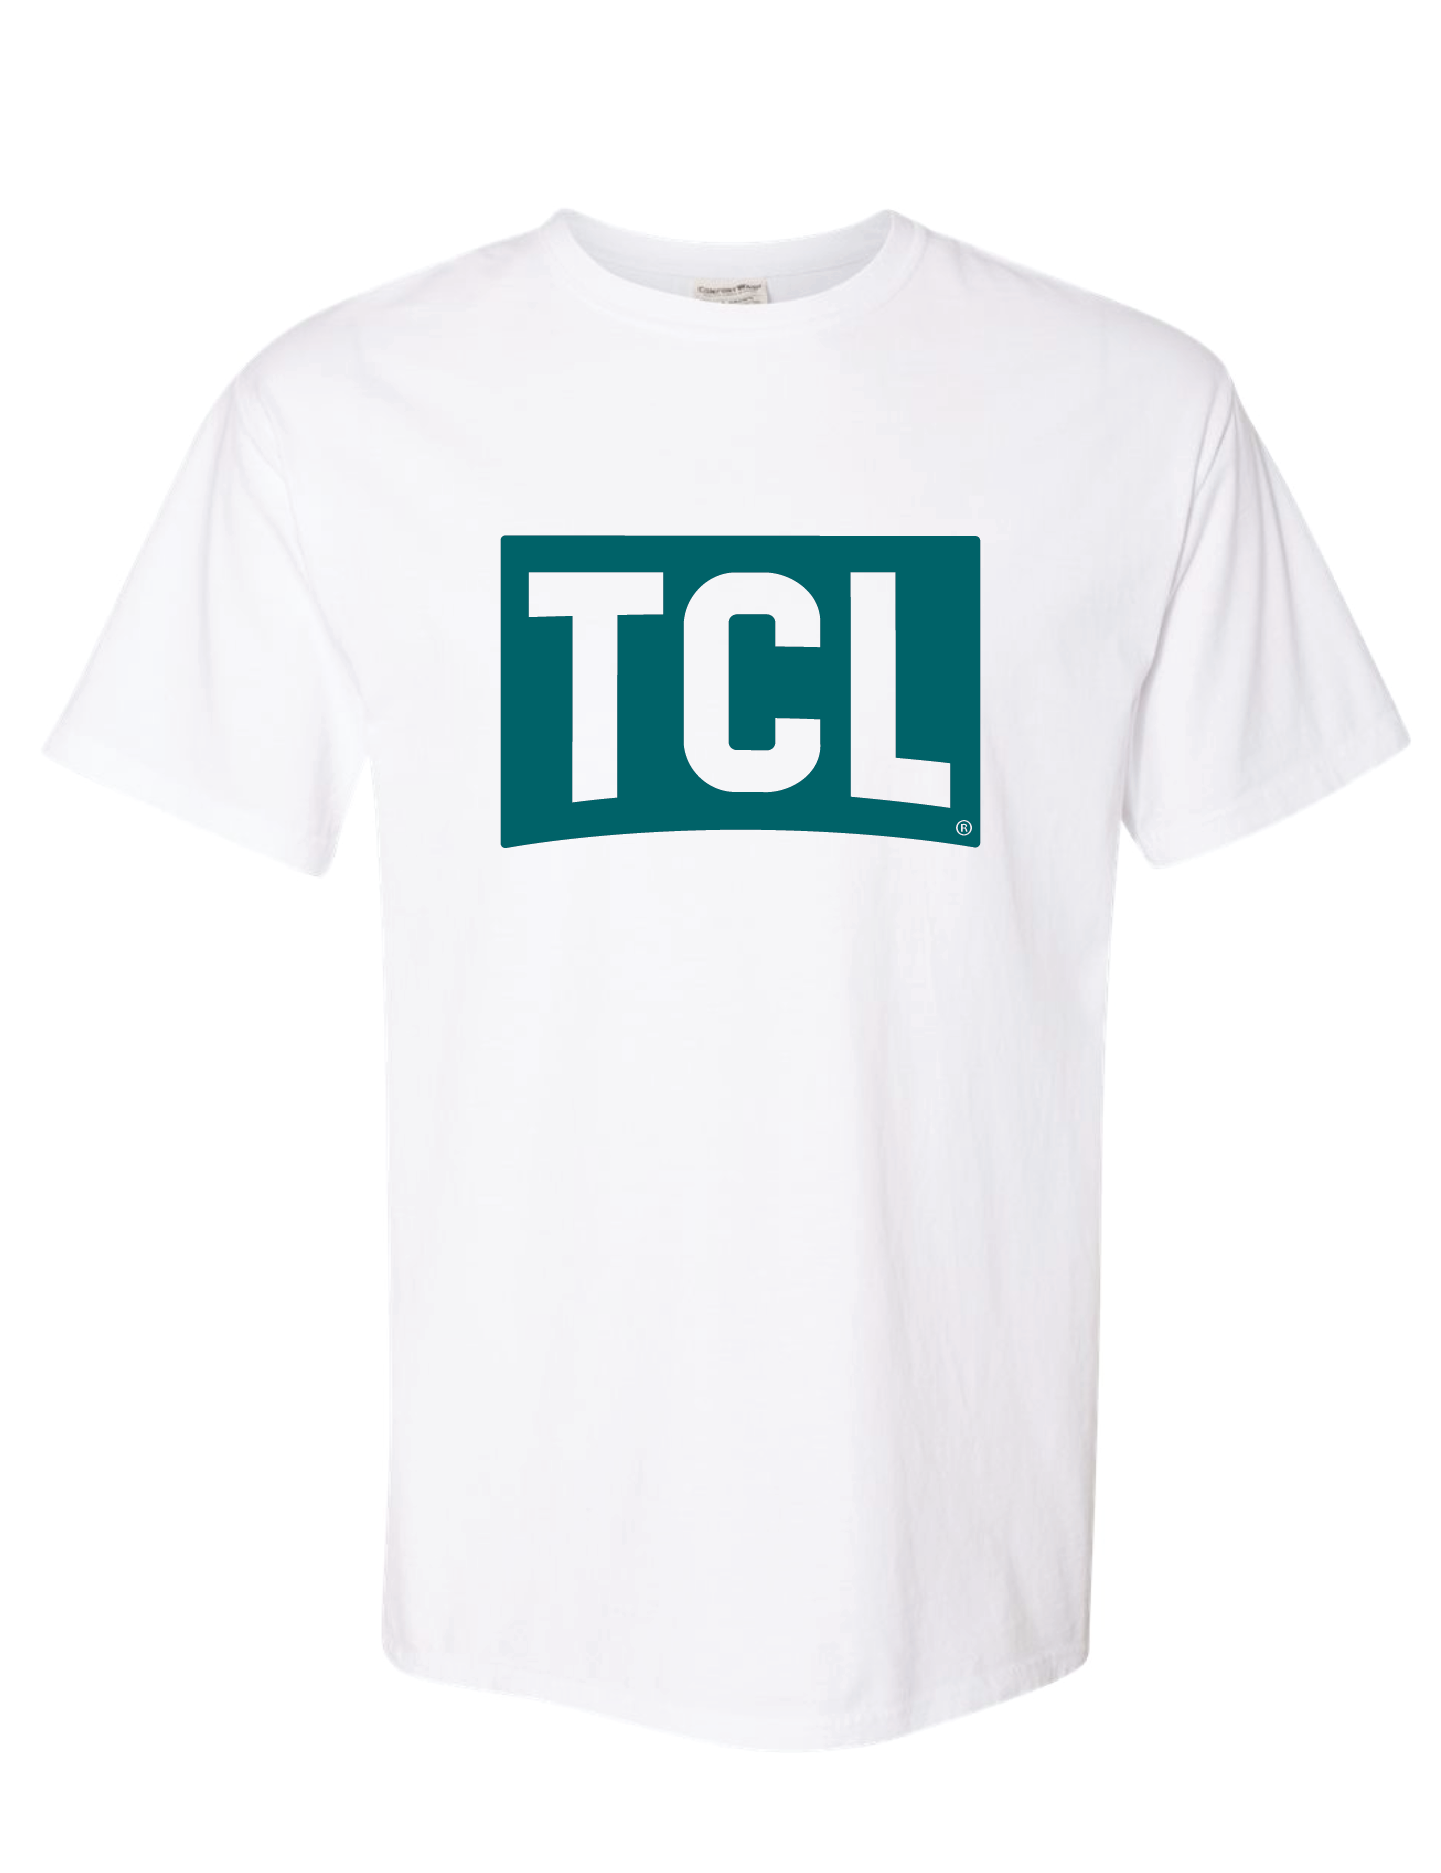 Visit Tuscaloosa: Short Sleeve TEAL TCL Tee